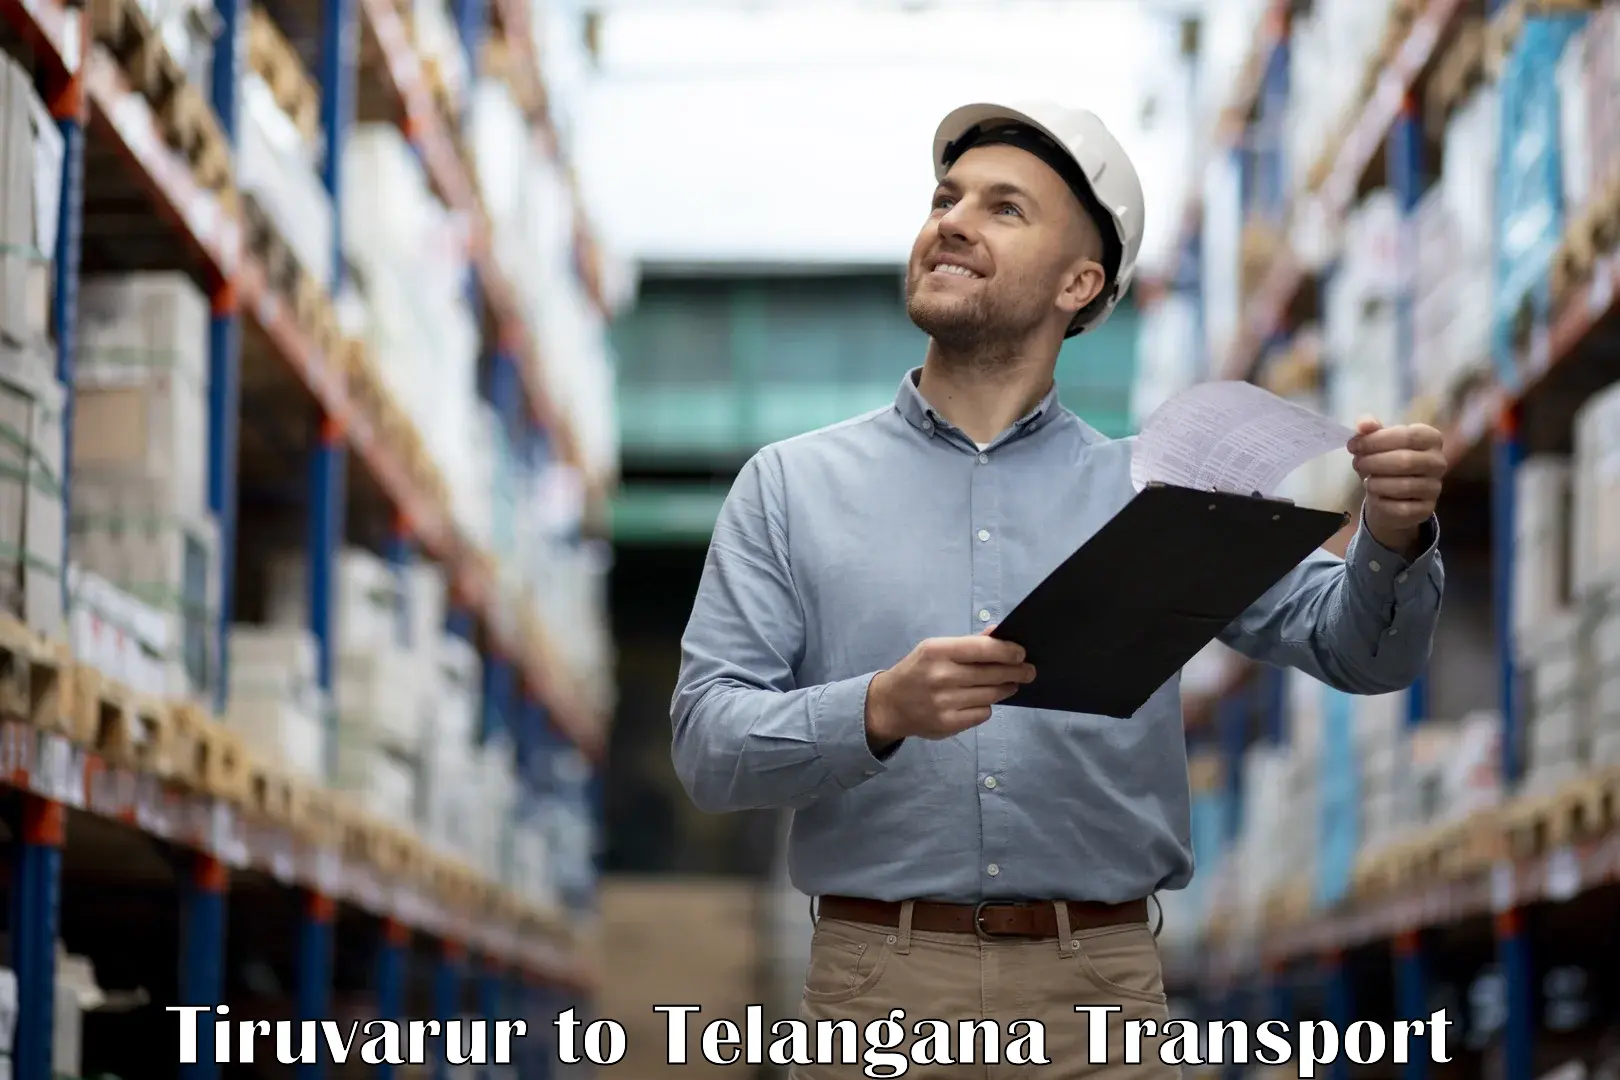 Online transport service Tiruvarur to Jainad